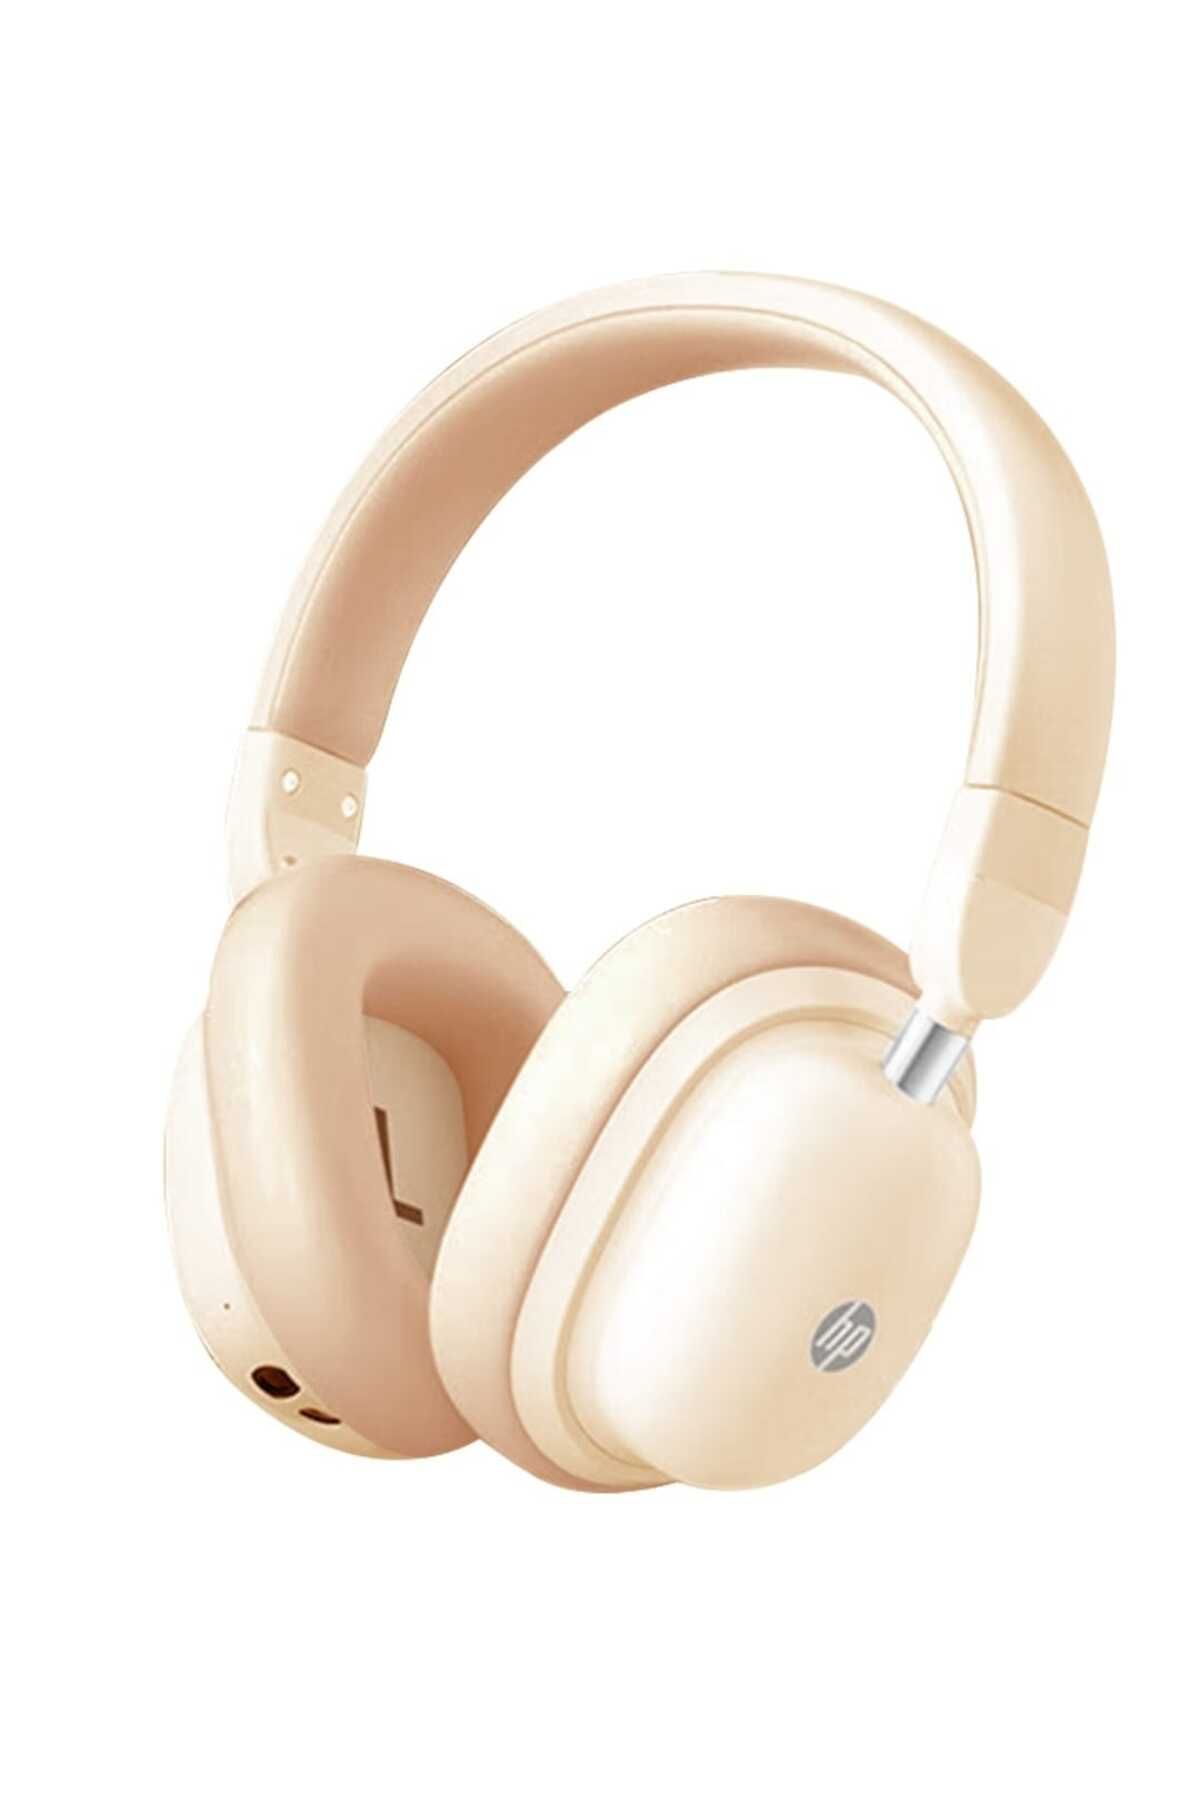 HP H231R Kablosuz Kulak Üstü Bluetooth Kulaklık V5.3 Rose Gold (Mikrofonlu, Çift Cihaz Desteği)